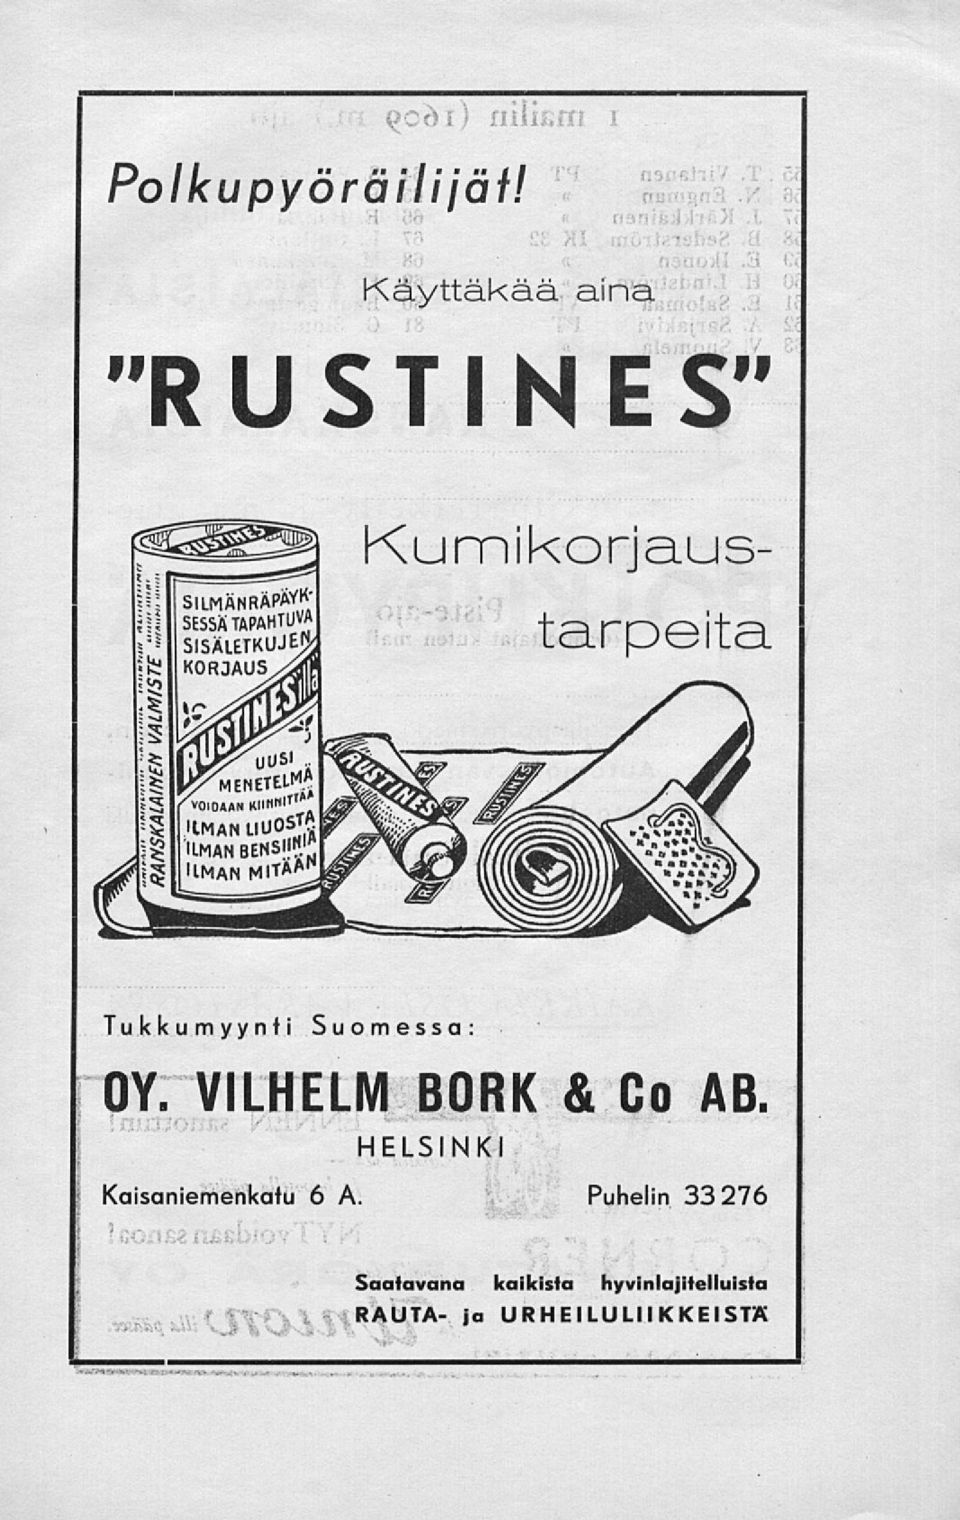 Tukkumyynti Suomessa: OY. VILHELM BORK & Co AB.